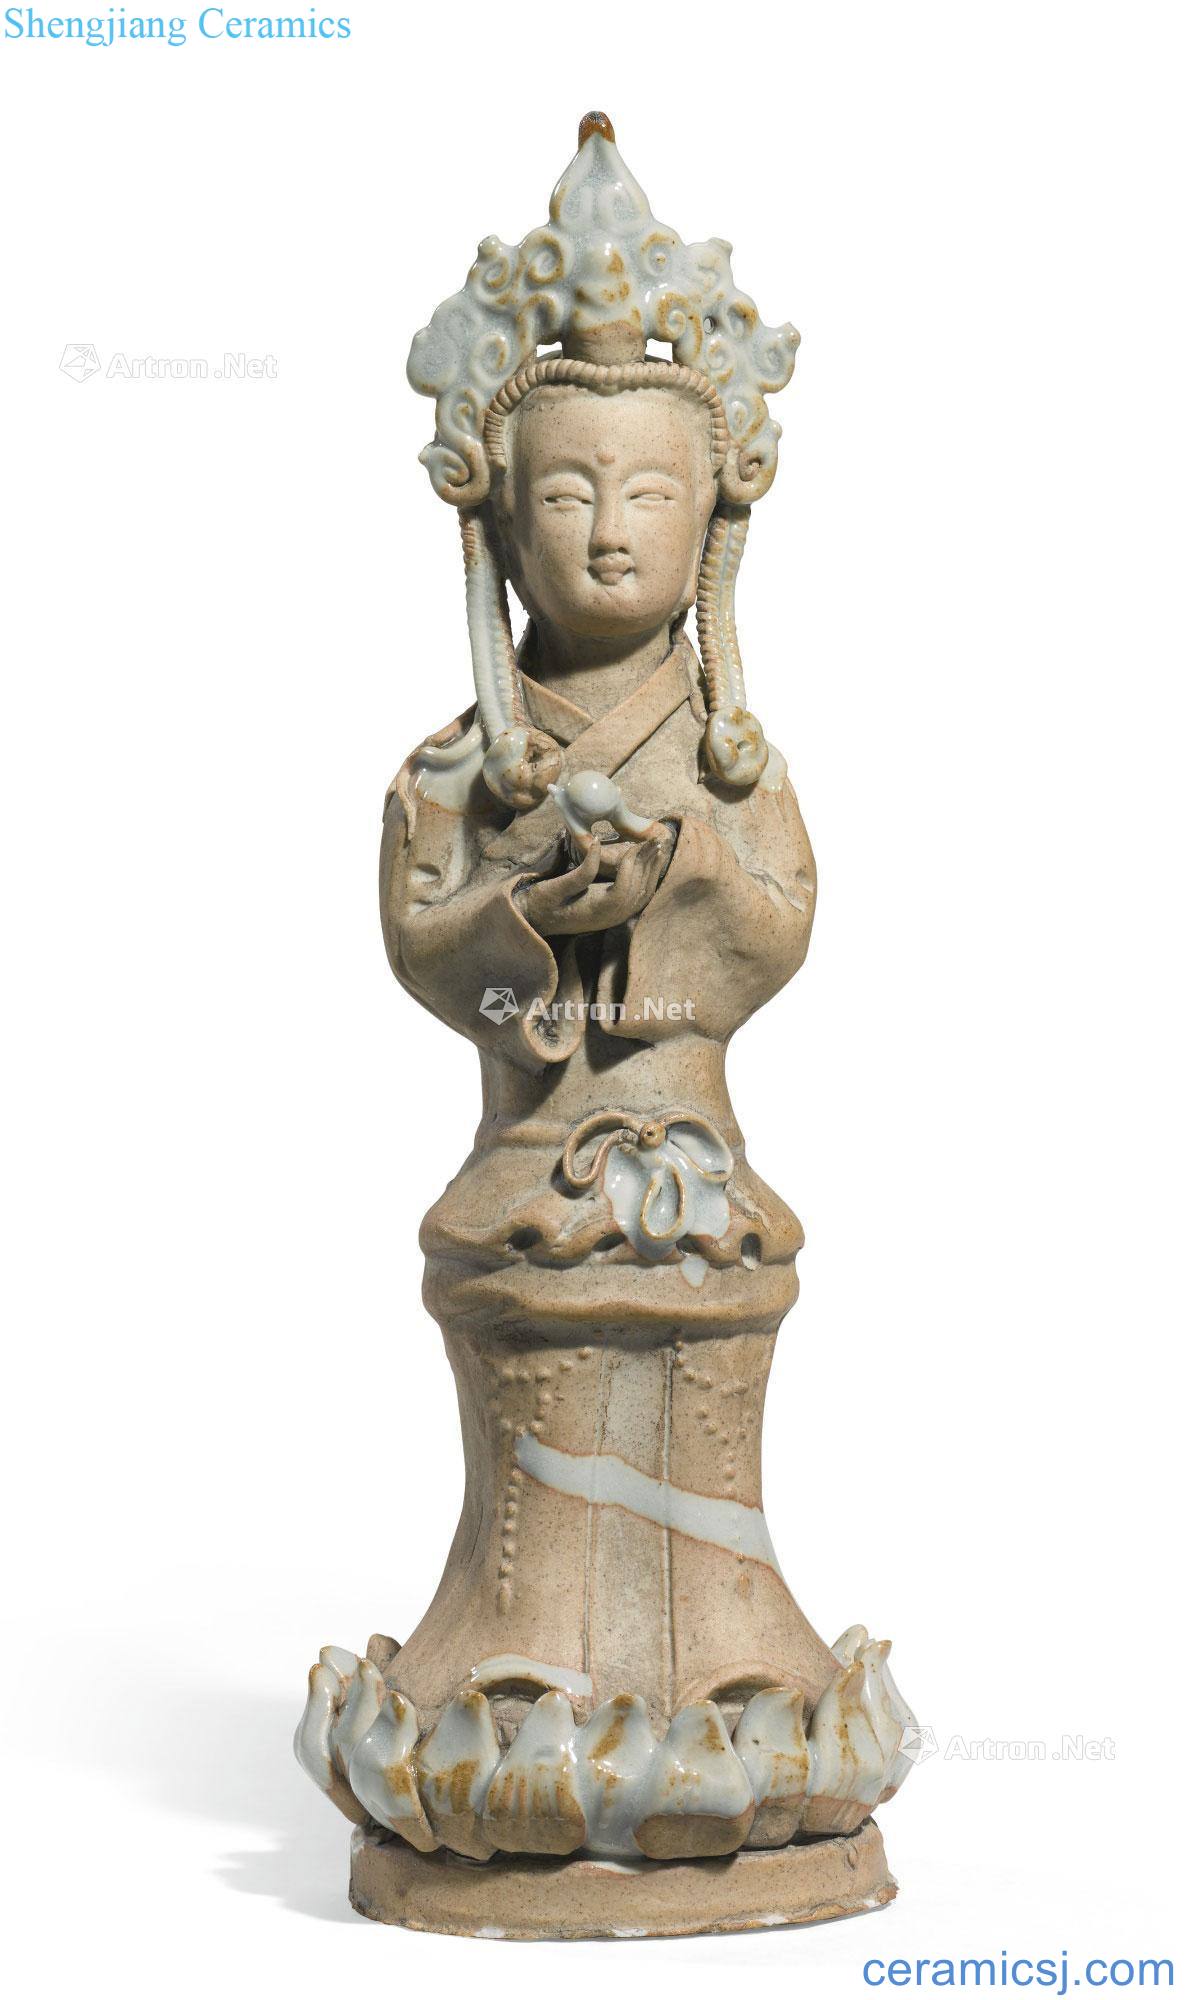 Song/yuan Green stands resemble white glaze bodhisattva